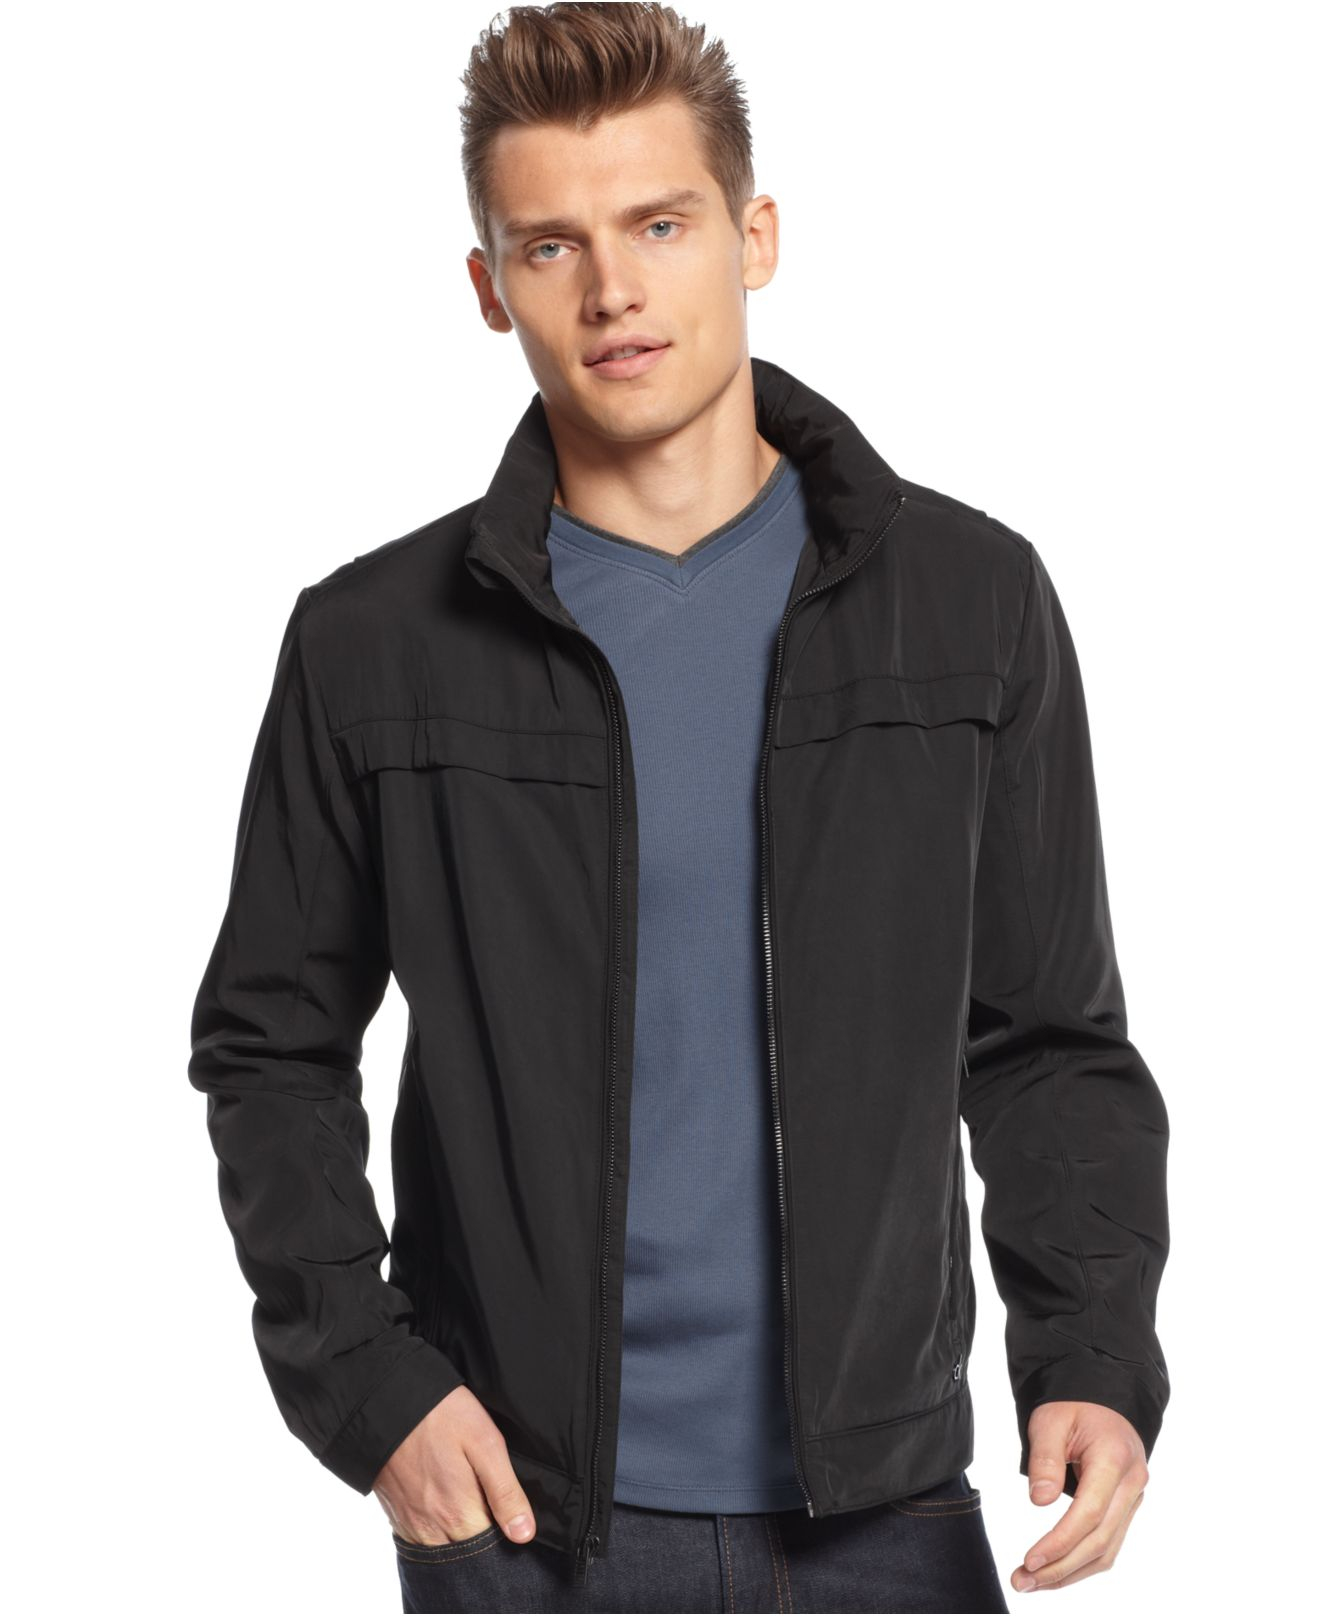 Lyst - Calvin Klein Core Lightweight Nylon Jacket in Black for Men